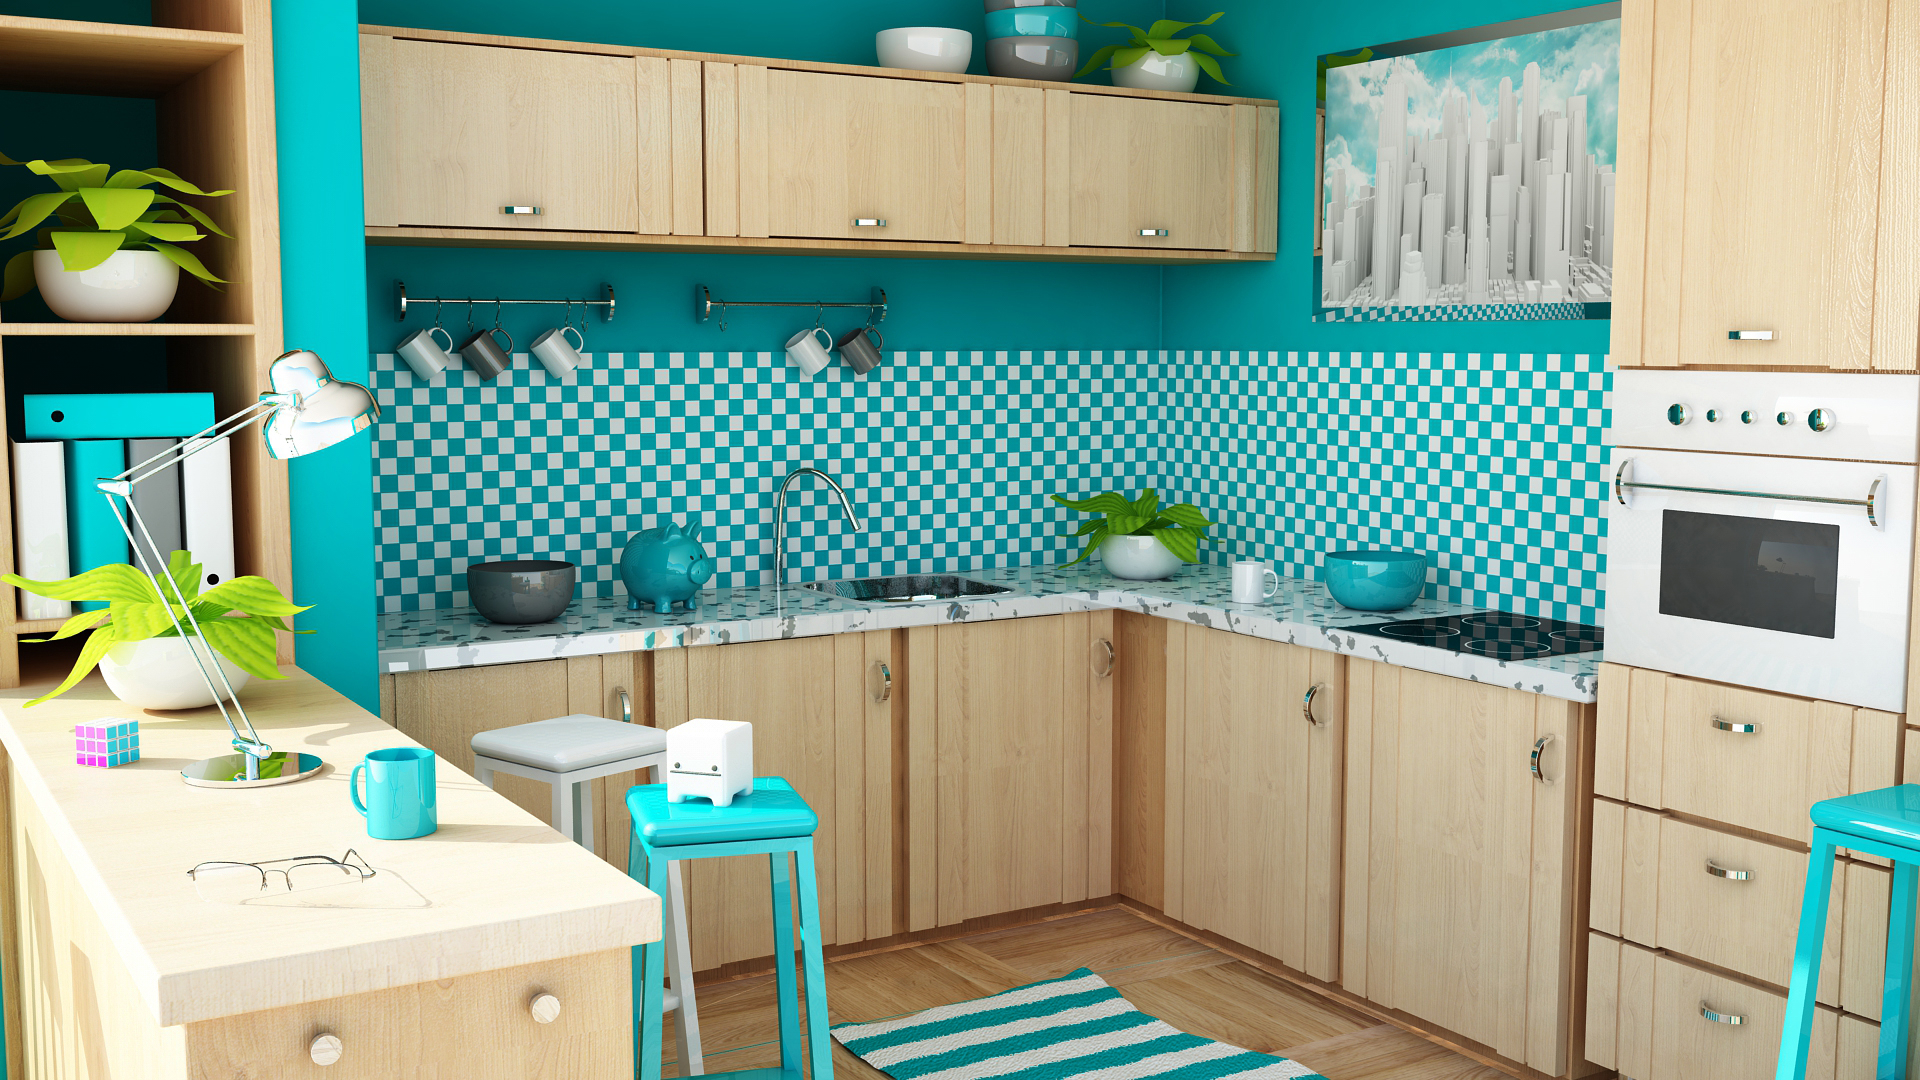 Download HD Kitchen Wallpaper Backgrounds for Desktop 1920x1080